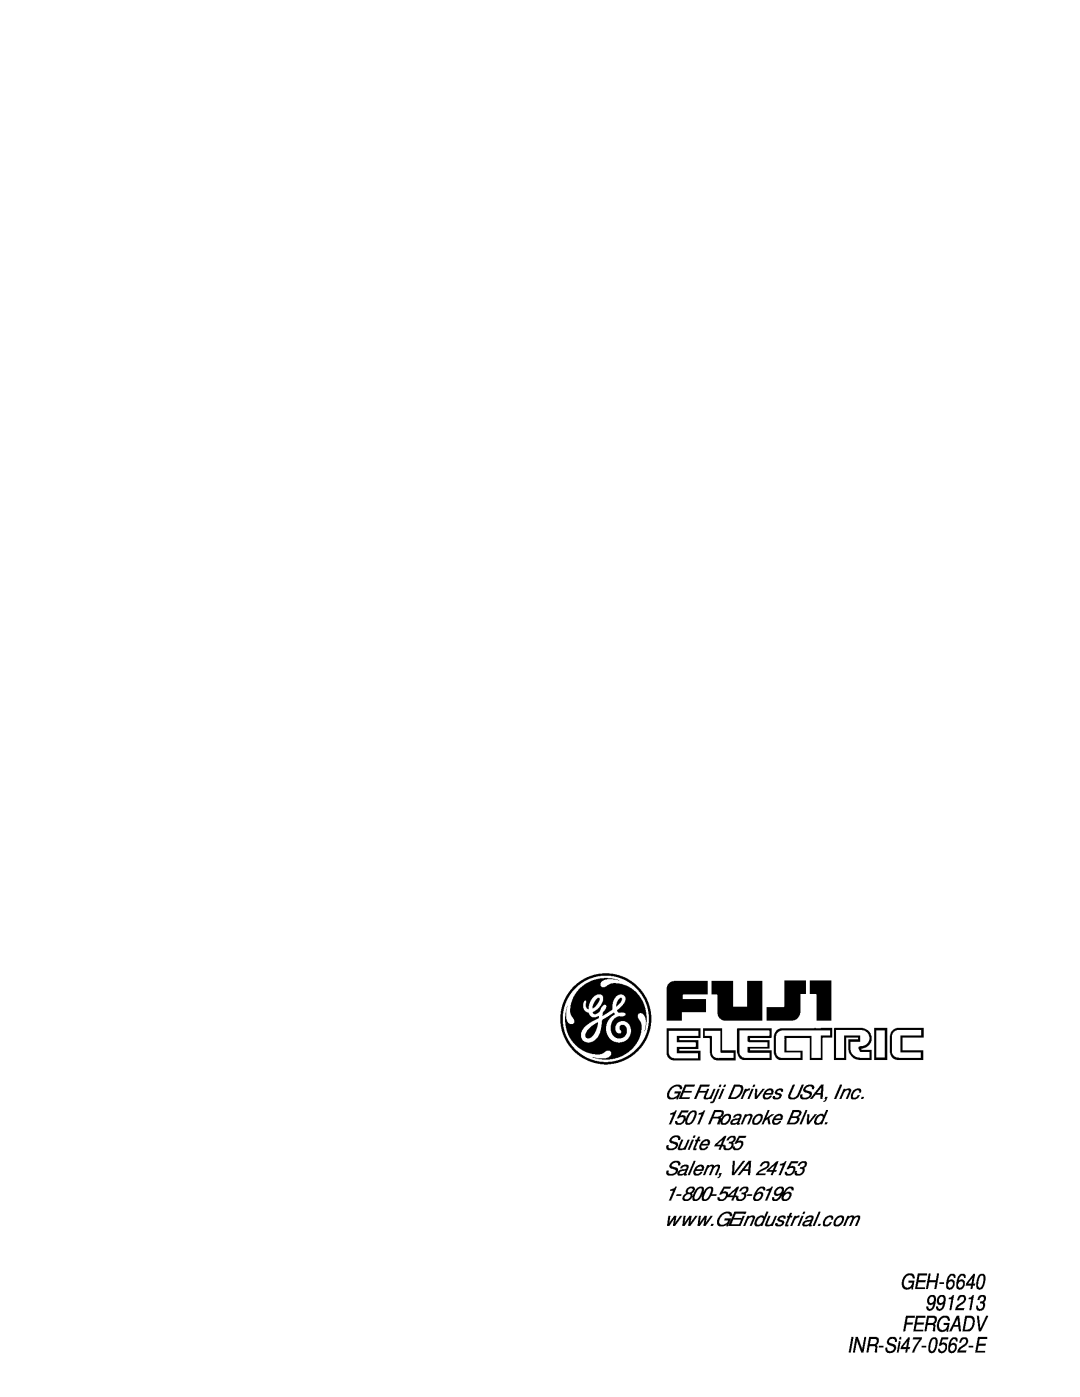 GE AF-300, C11 manual GE Fuji Drives USA, Inc. 1501 Roanoke Blvd. Suite, GEH-6640 991213 FERGADV INR-Si47-0562-E 